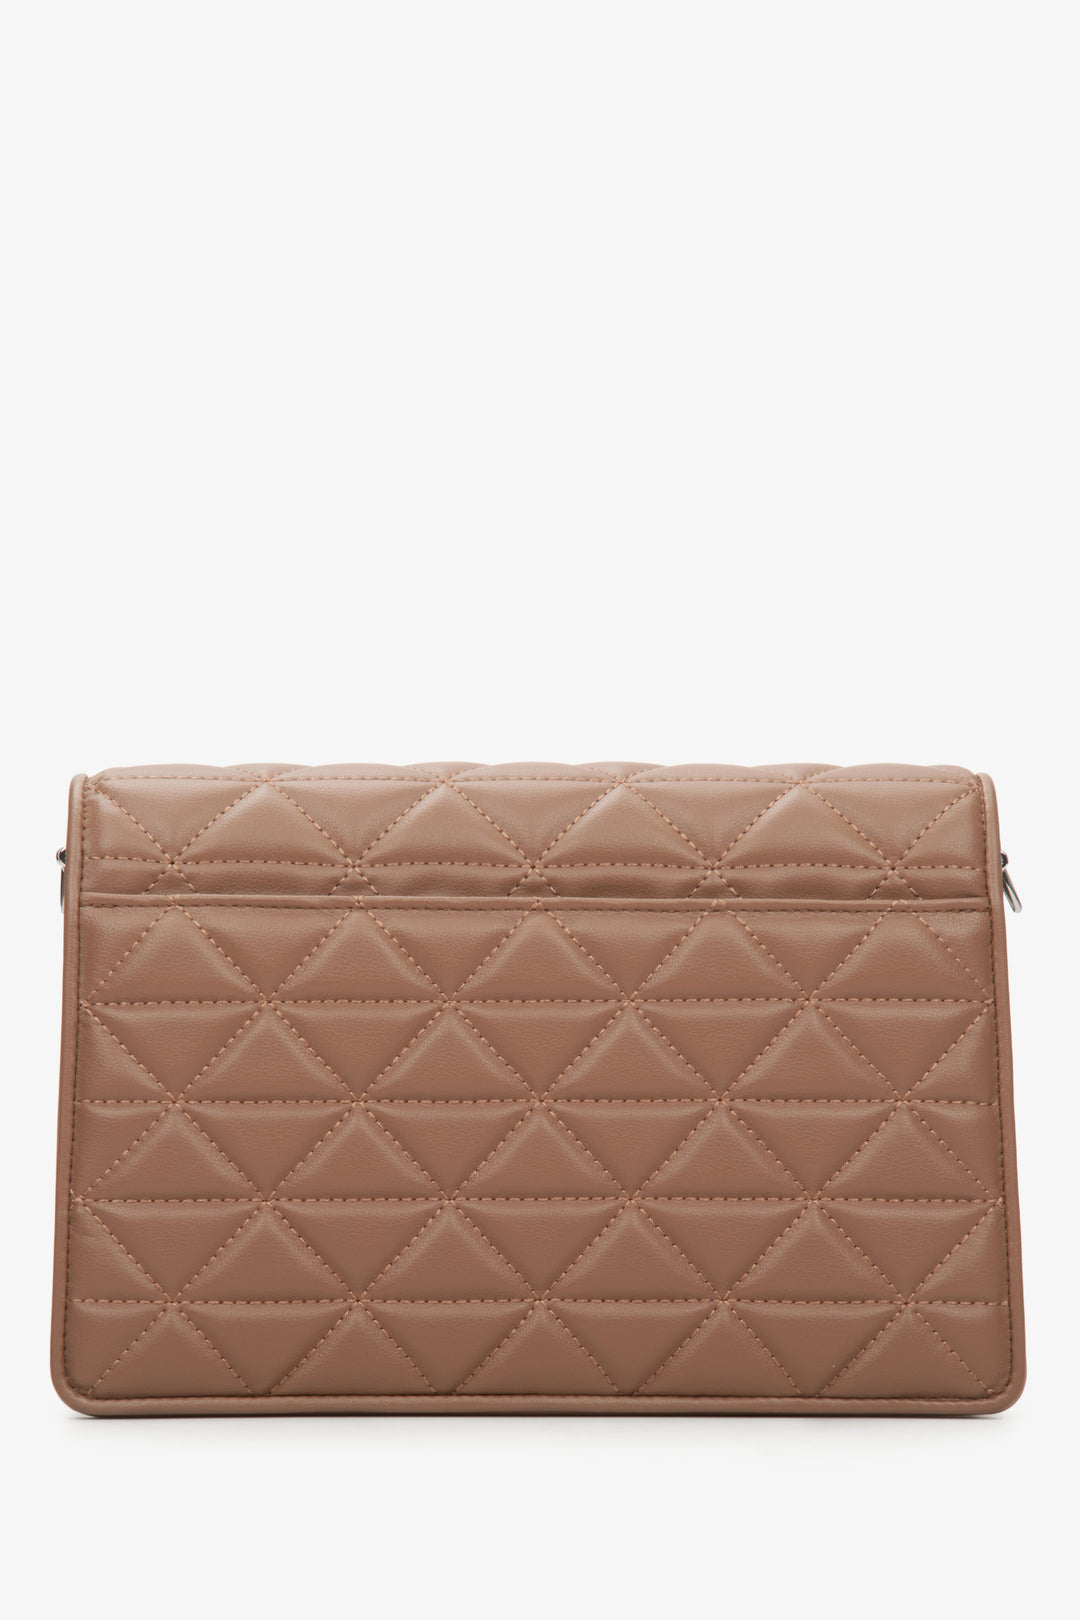 Estro women's brown leather shoulder bag - back view.